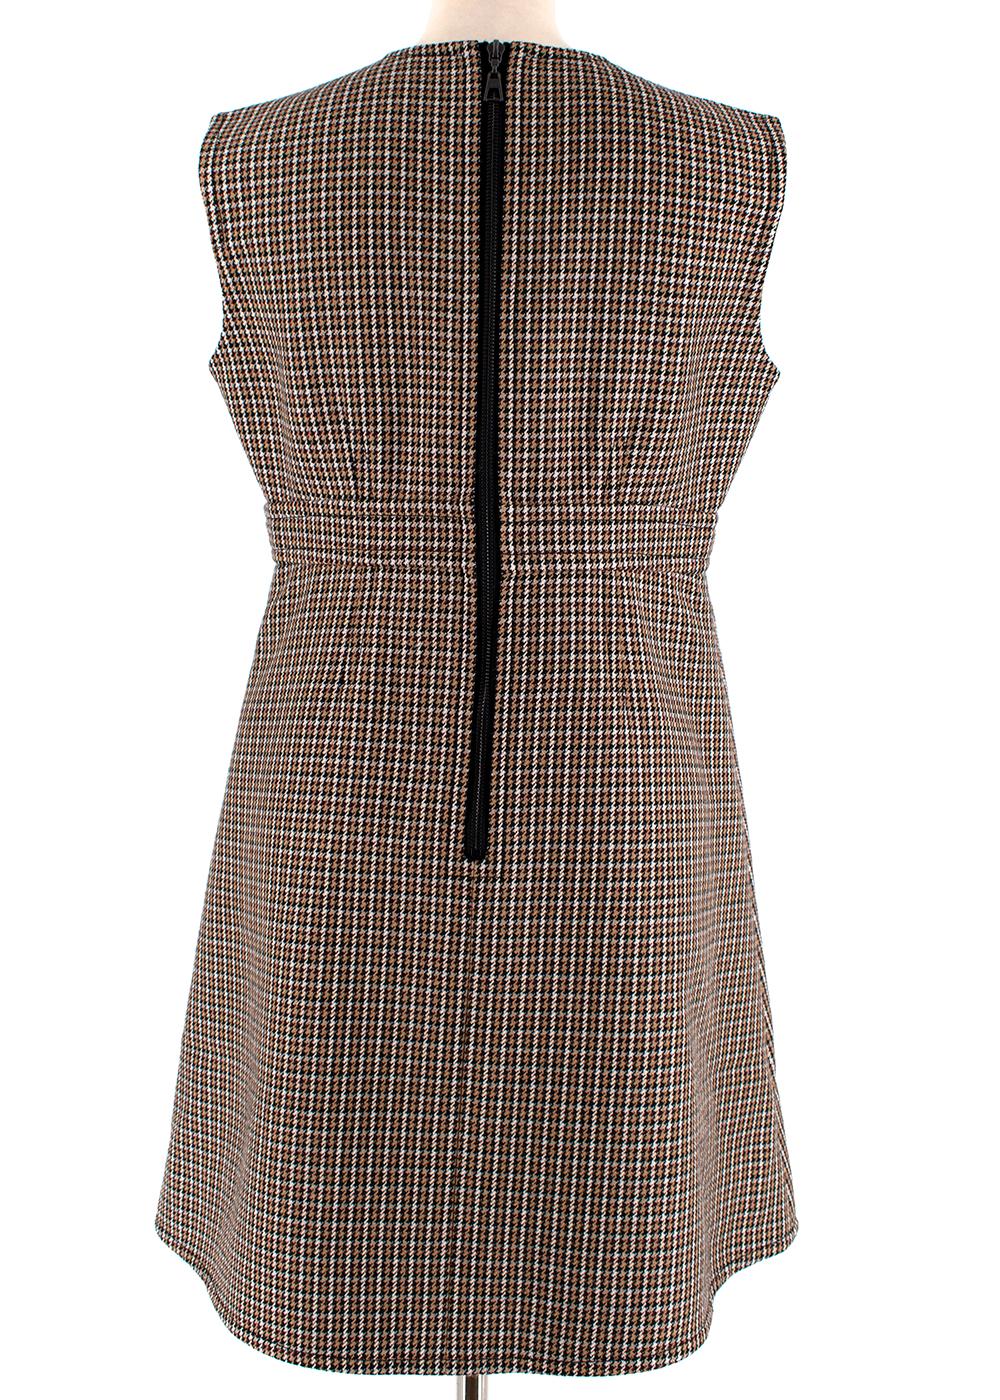 Brown Louis Vuitton Houndstooth Wool Sleeveless Dress - Size US 6